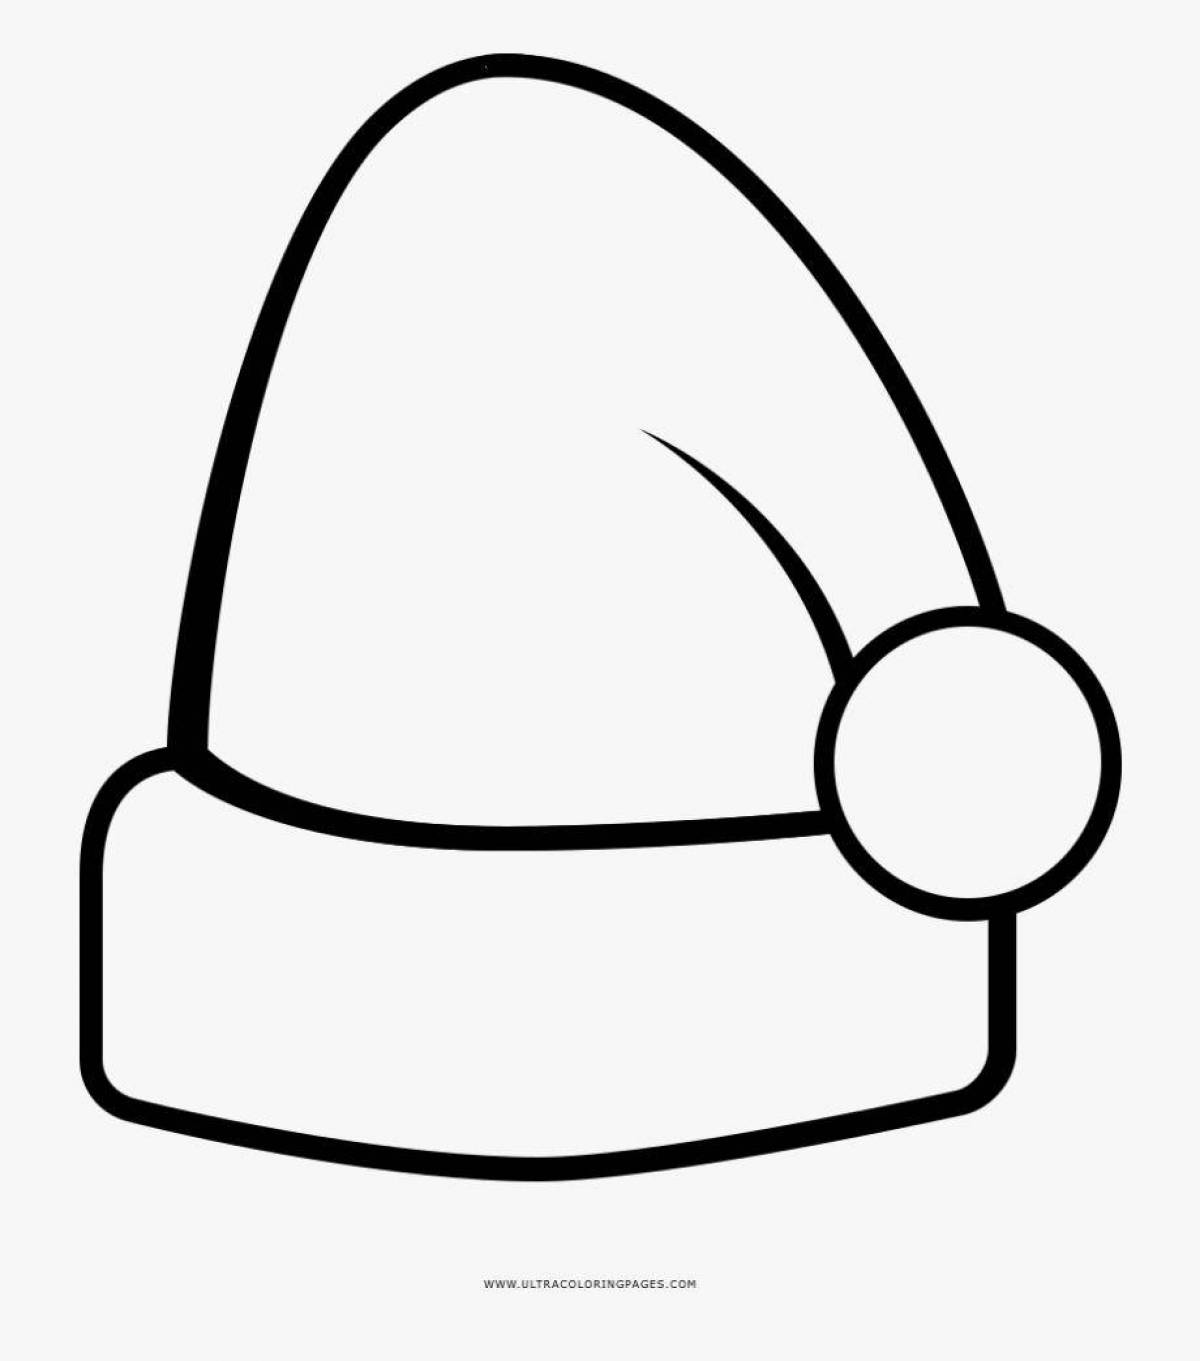 Fancy santa hat coloring page